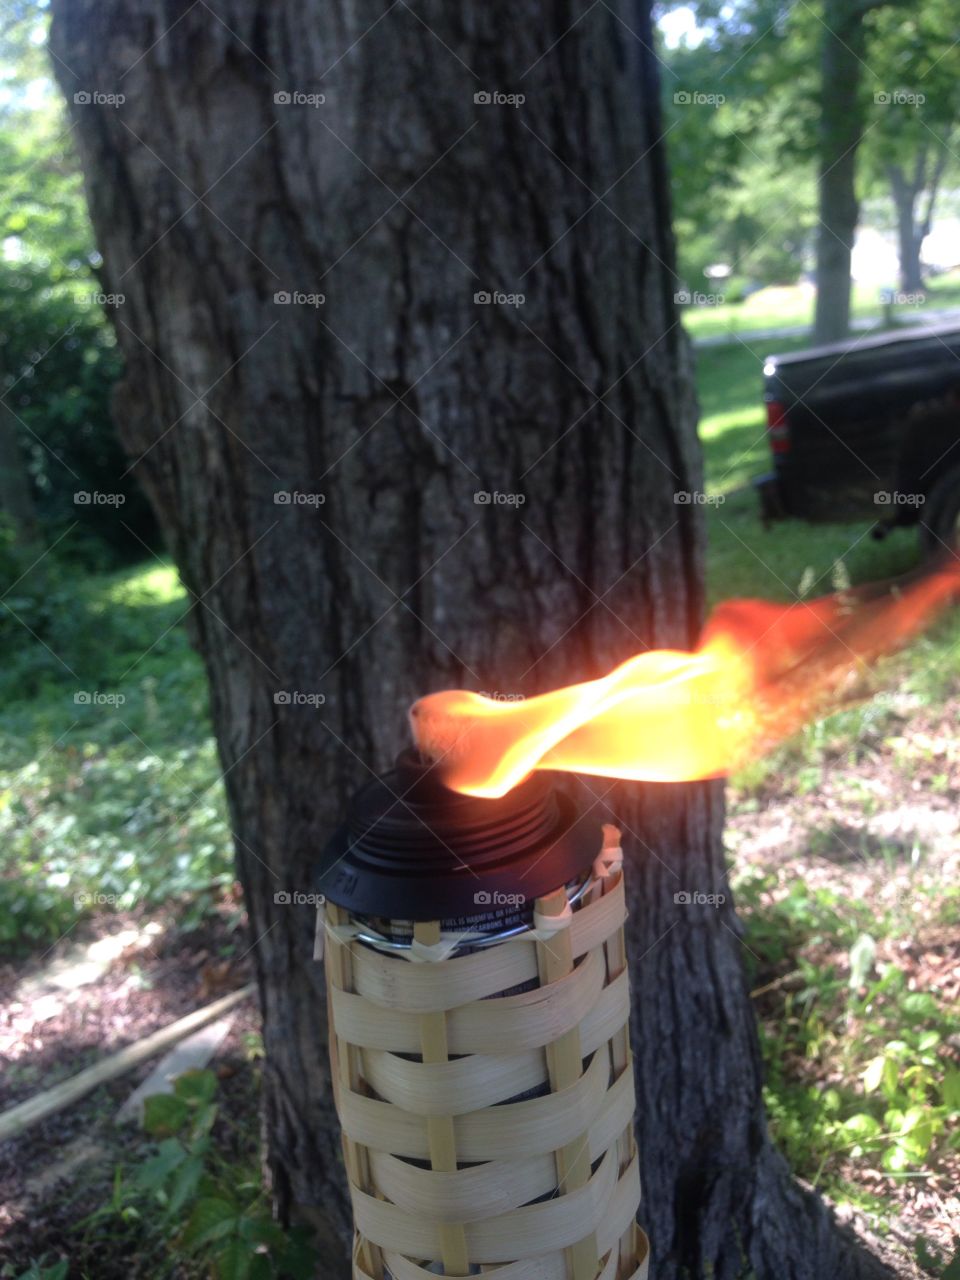 Fire+wood=bigger fire